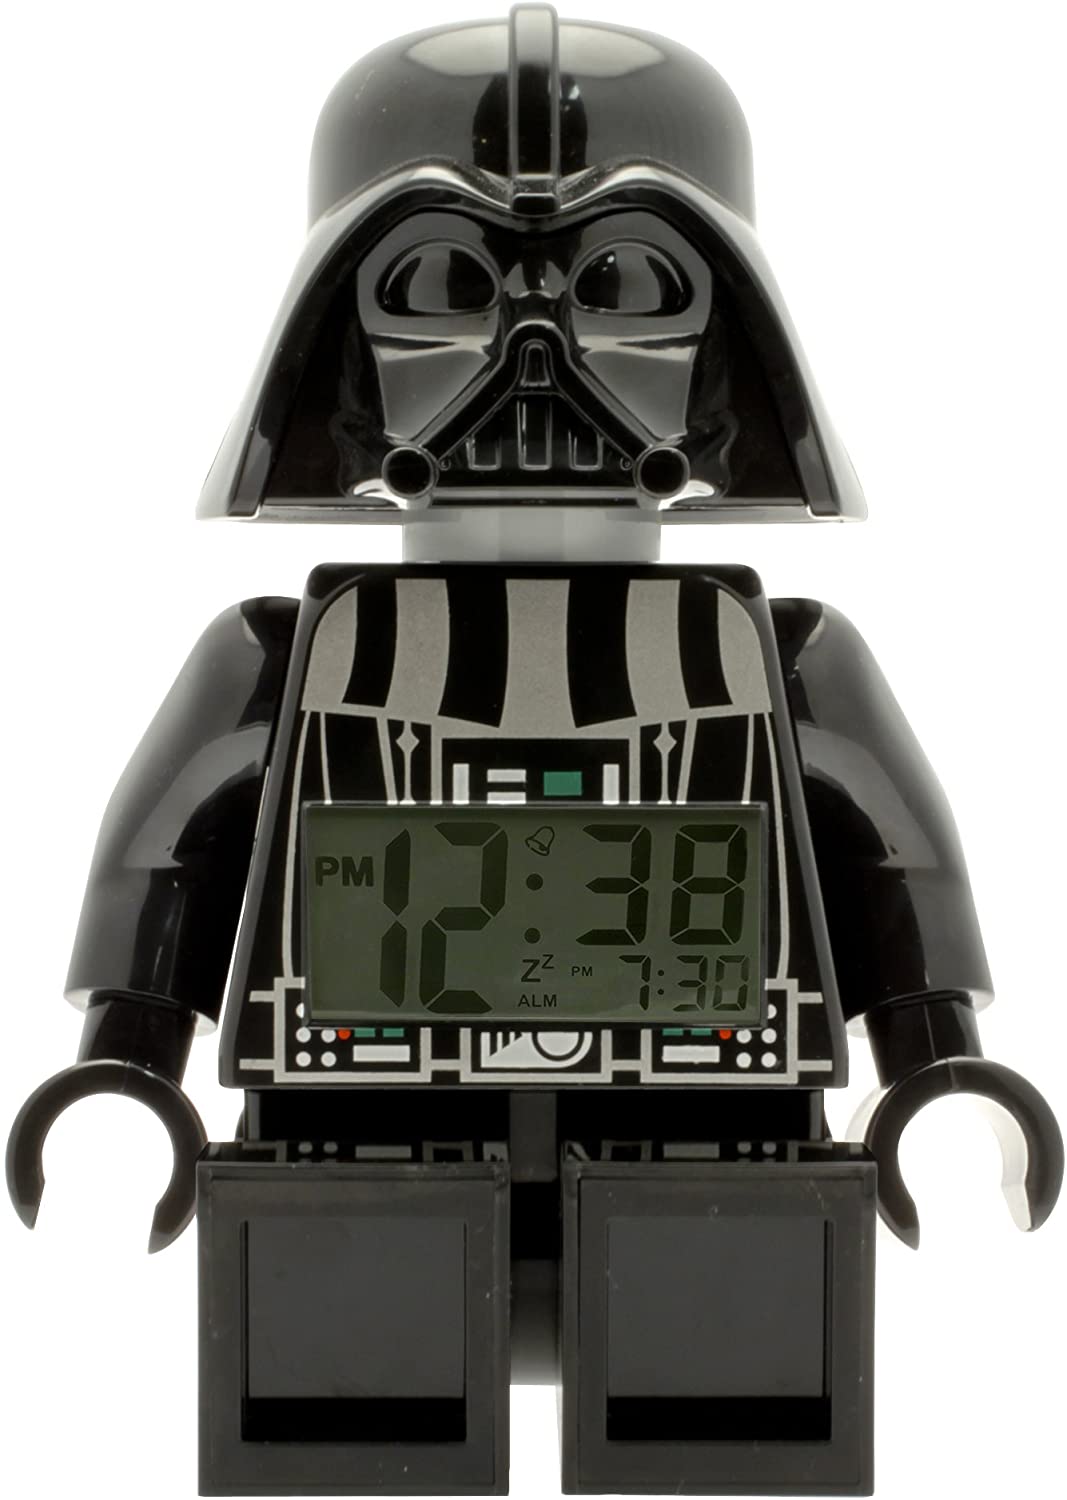 Réveil Star Wars <br> Vador Lego